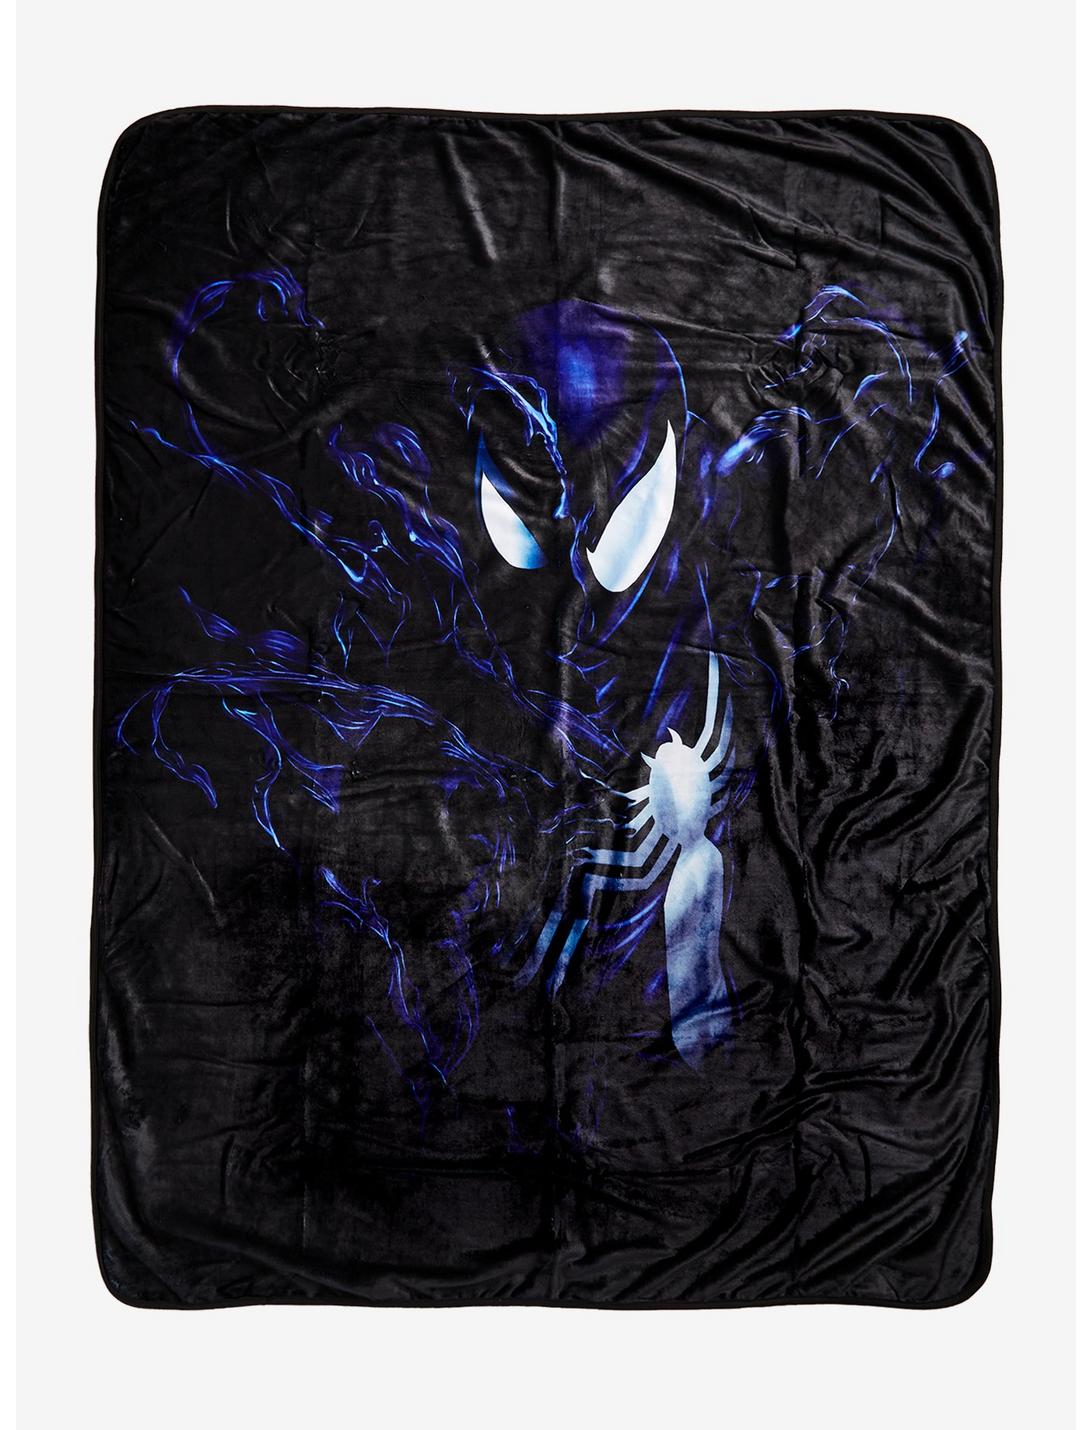 Marvel Spider-Man Men's/Boys Warm Sleeved Fleece Blanket /Snuggie Bedding NWT 